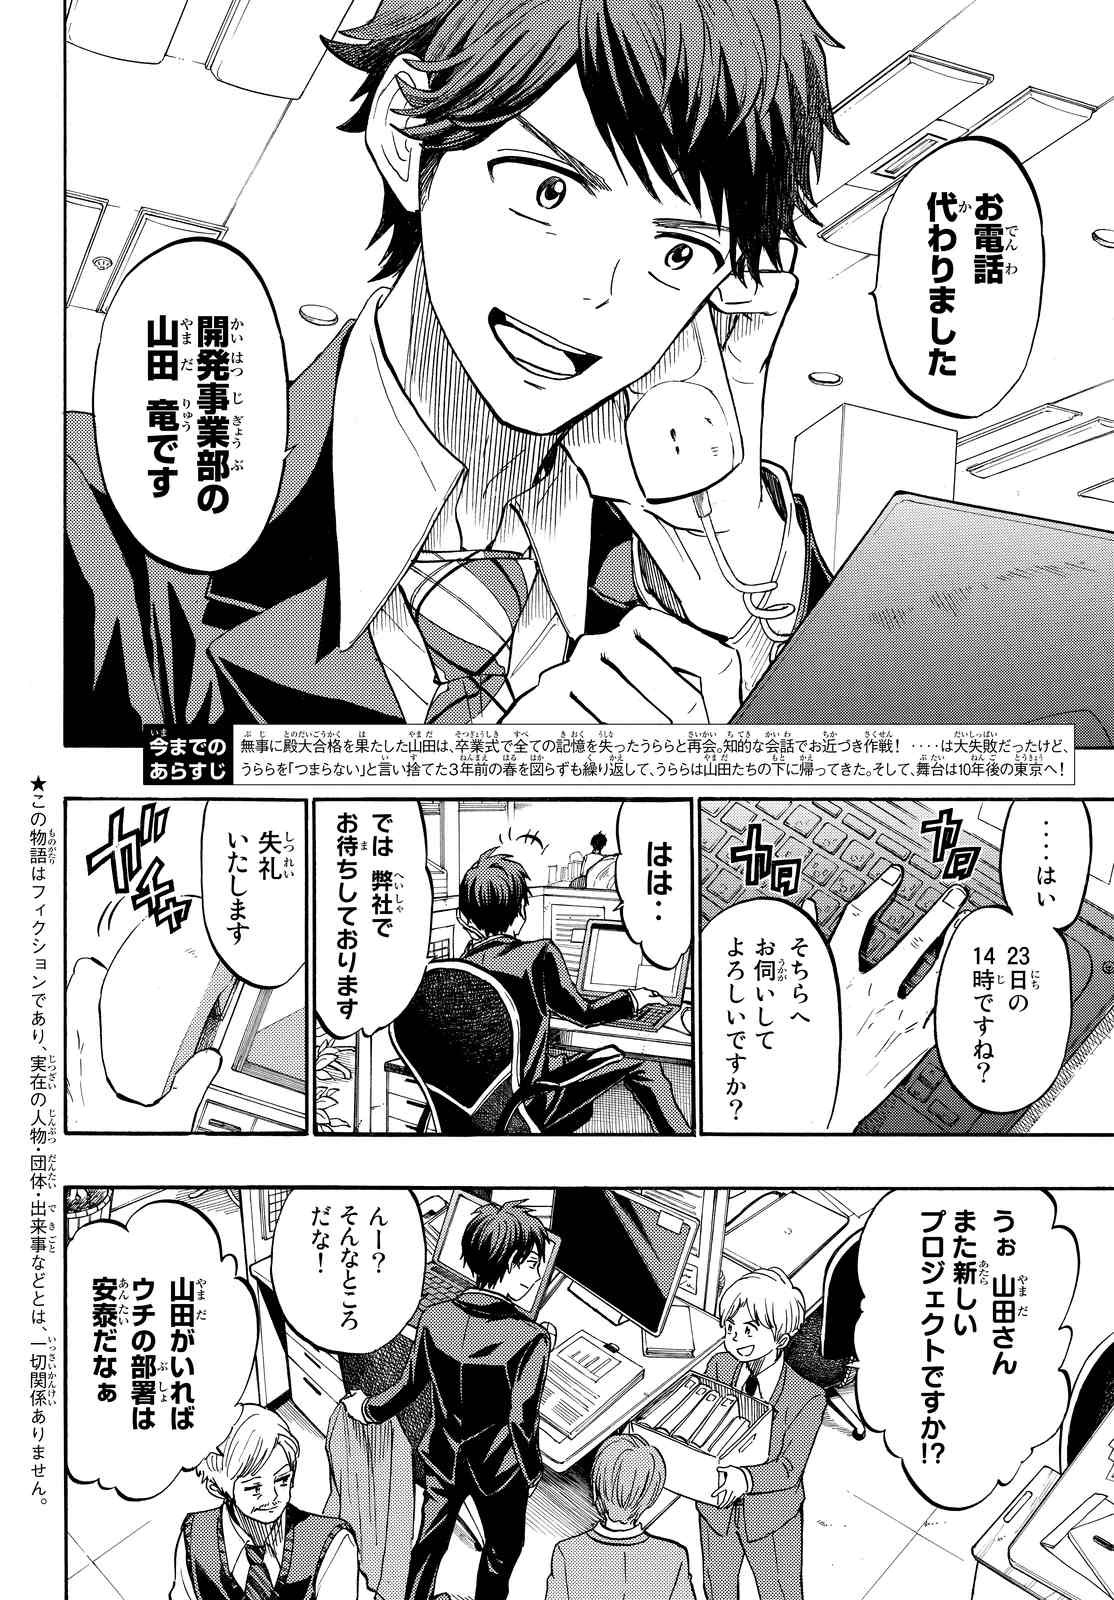 Yamada-kun to 7-nin no Majo - Chapter 242 - Page 2